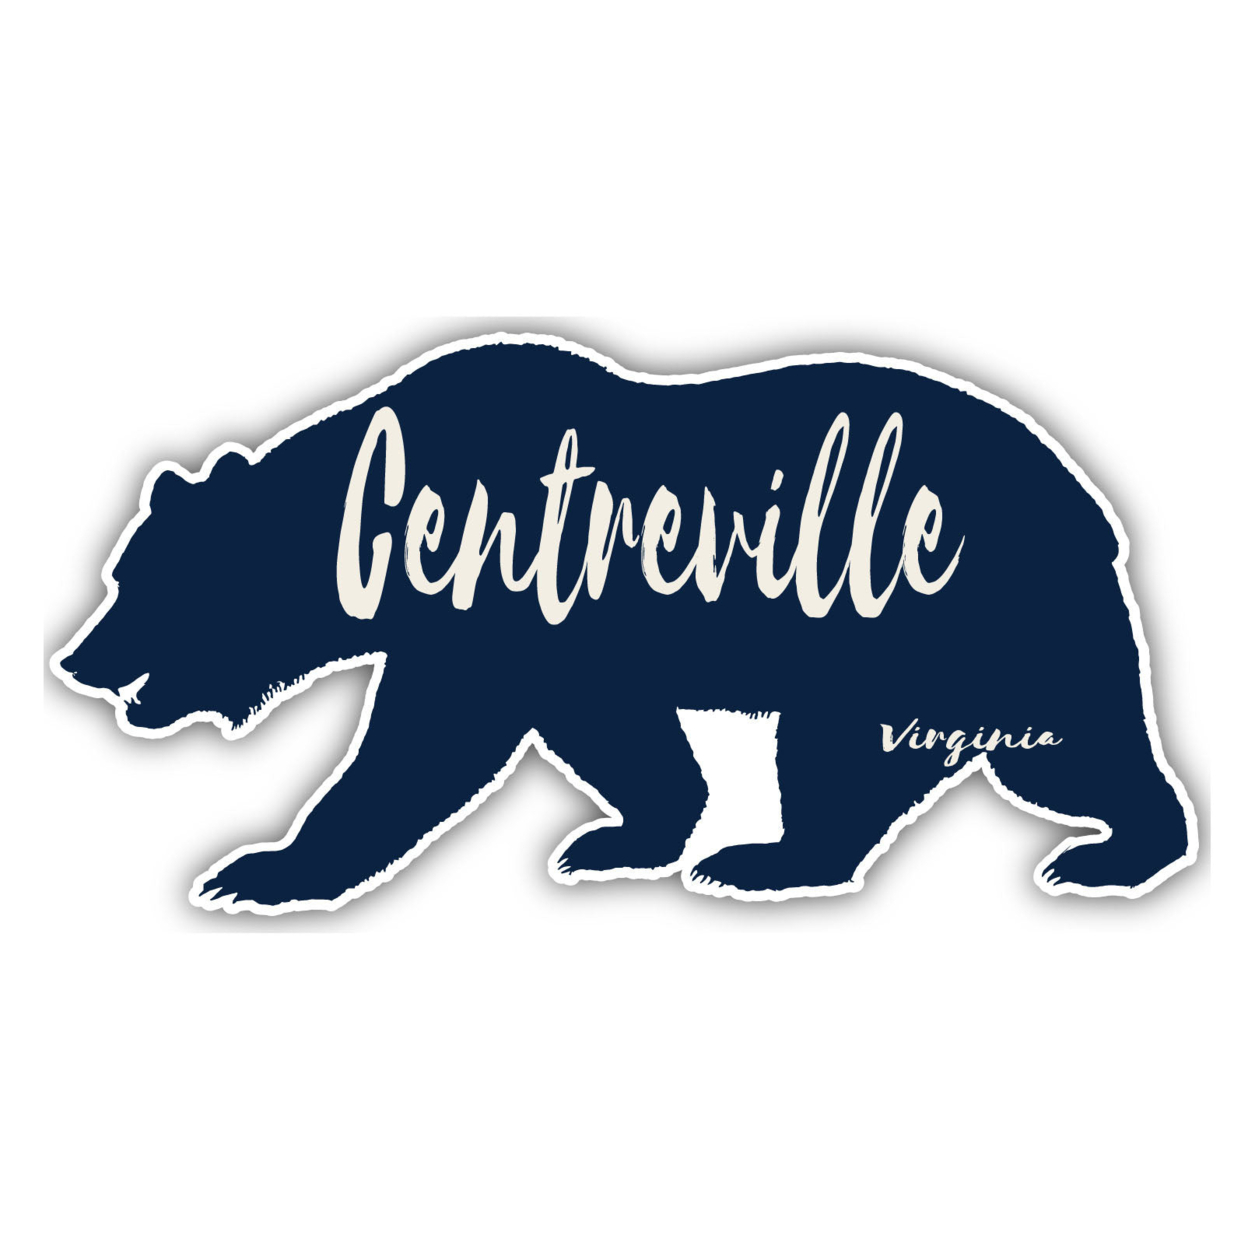 Centreville Virginia Souvenir Decorative Stickers (Choose Theme And Size) - Single Unit, 4-Inch, Bear